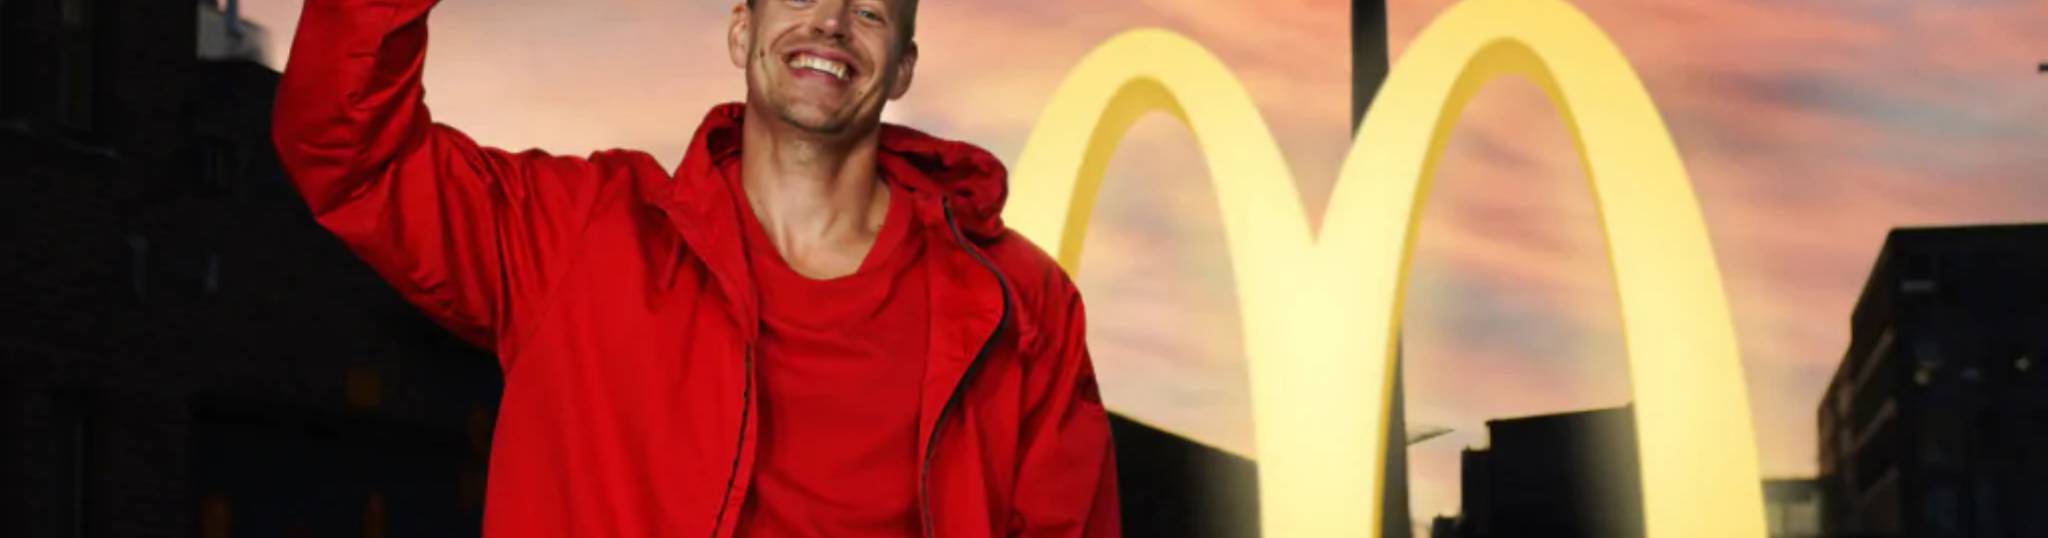 McDonald’s Finland makes jingle deaf-inclusive